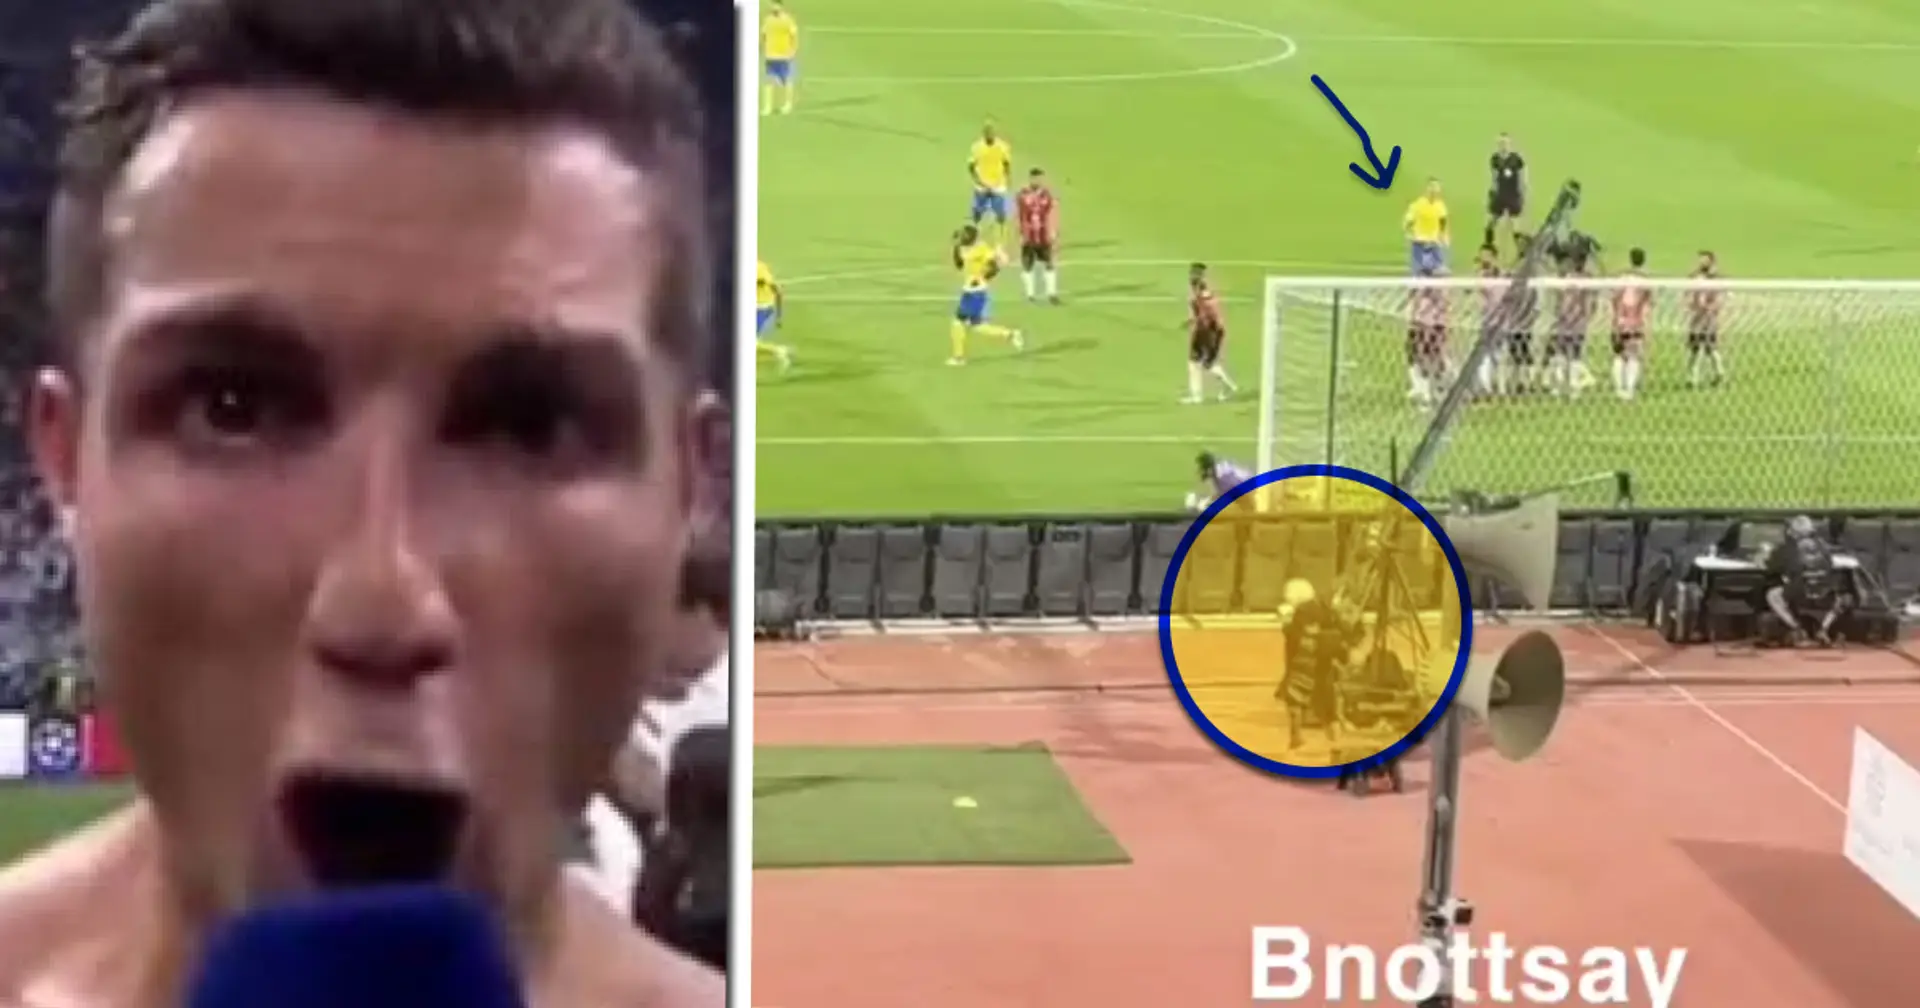 You good bro? 😂💀 Ronaldo's Free kick hit the camera man